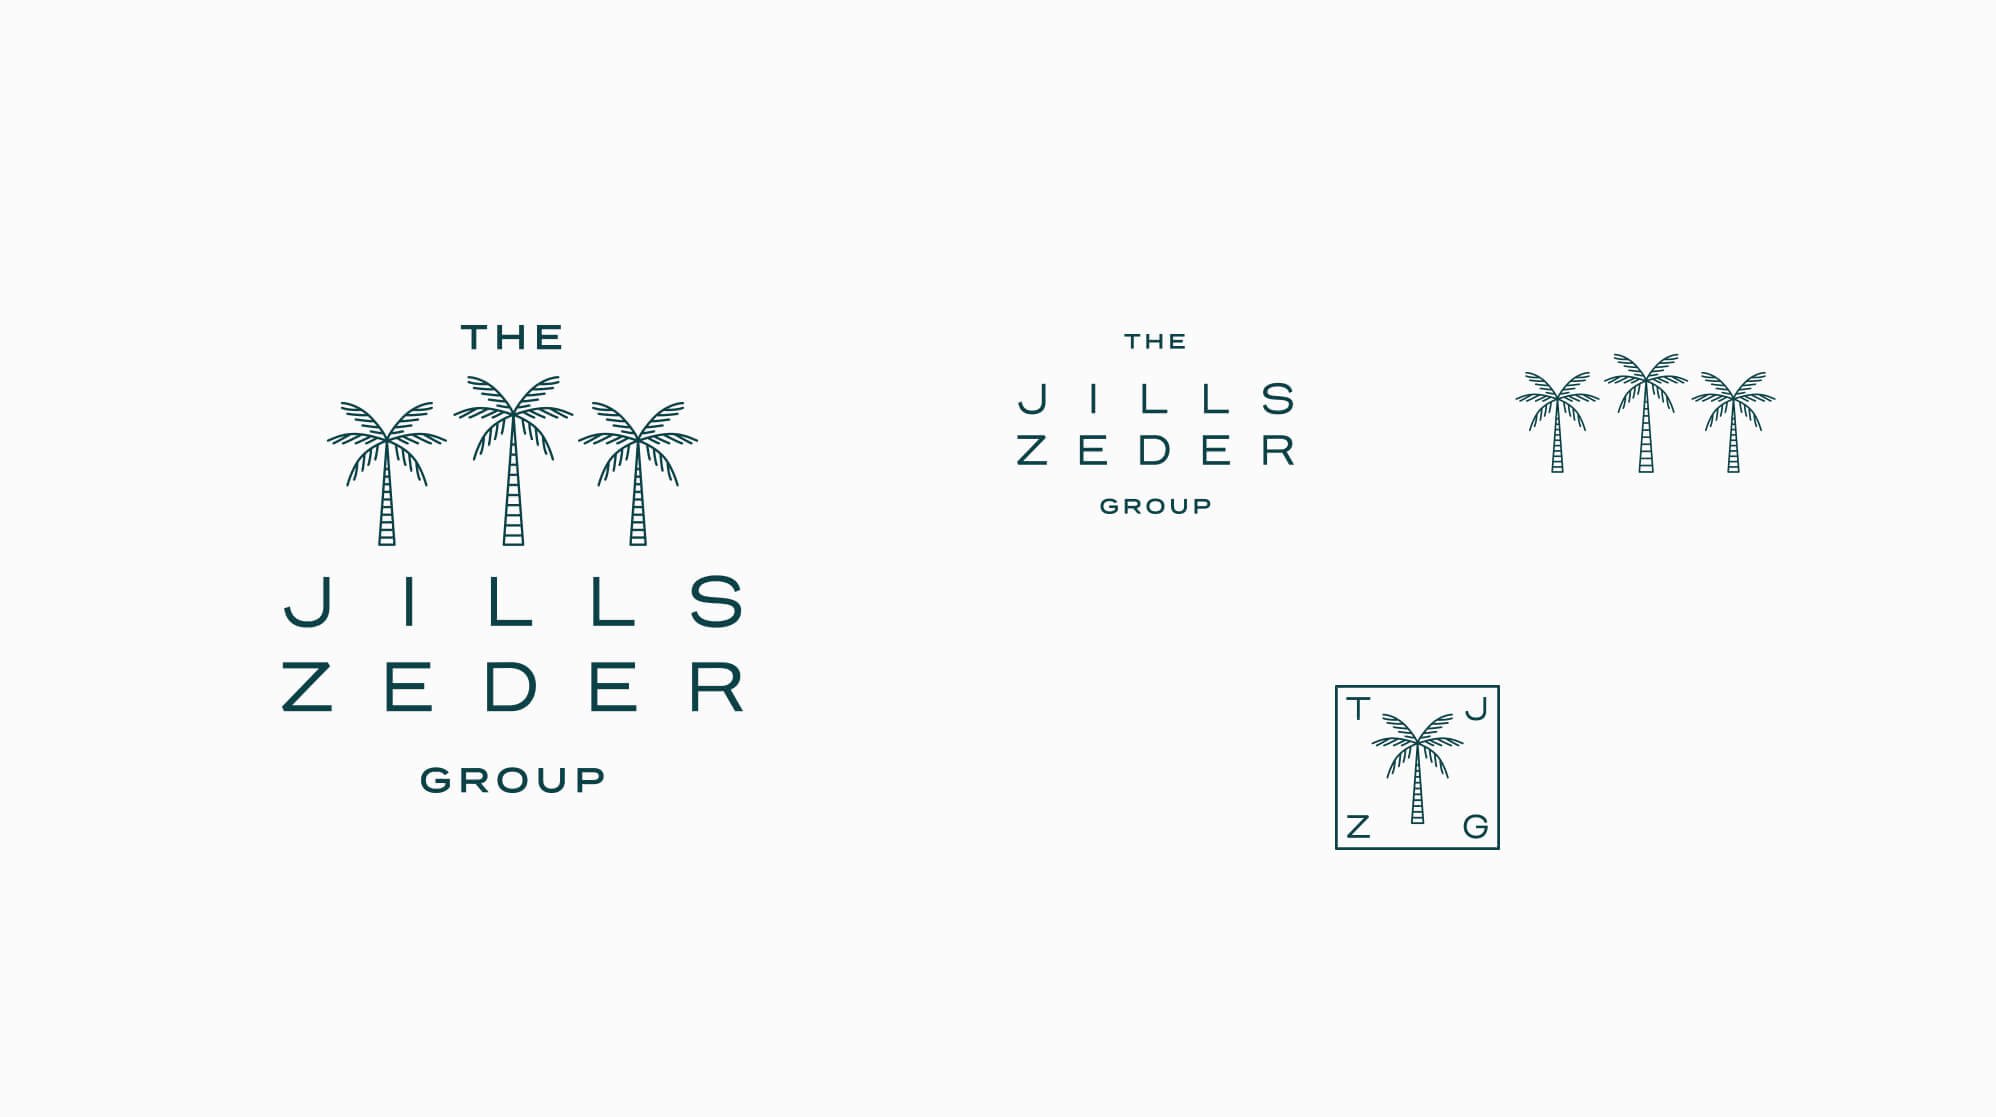 Jacober Creative Brand Identity for The Jills Zeder Group. Logo variants